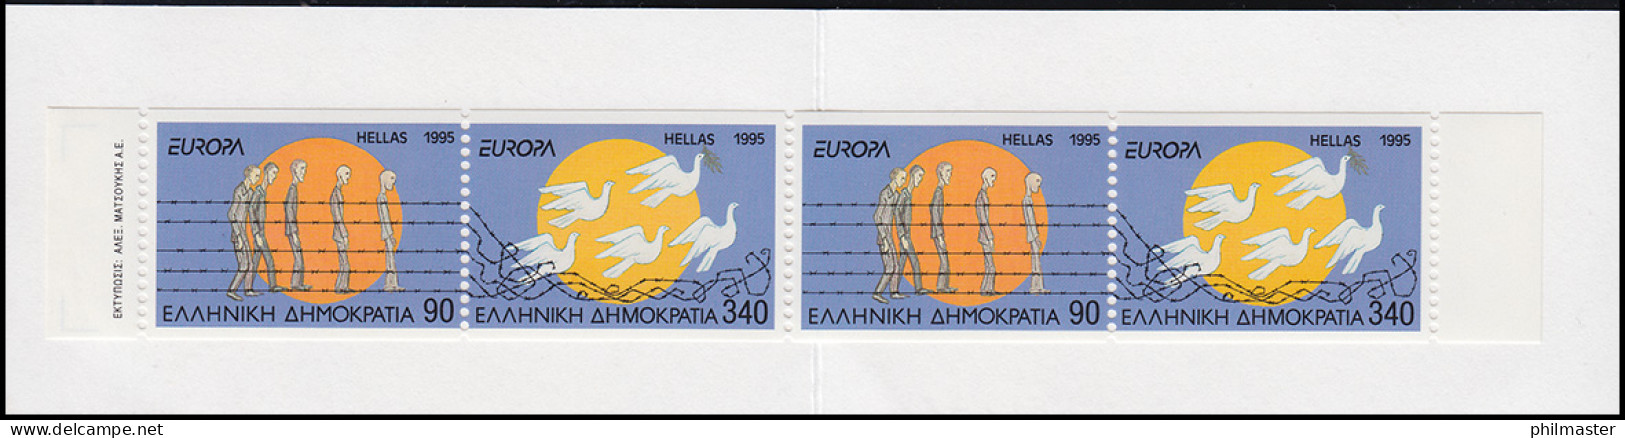 Griechenland Markenheftchen 18 Europa 1995, ** Postfrisch - Carnets